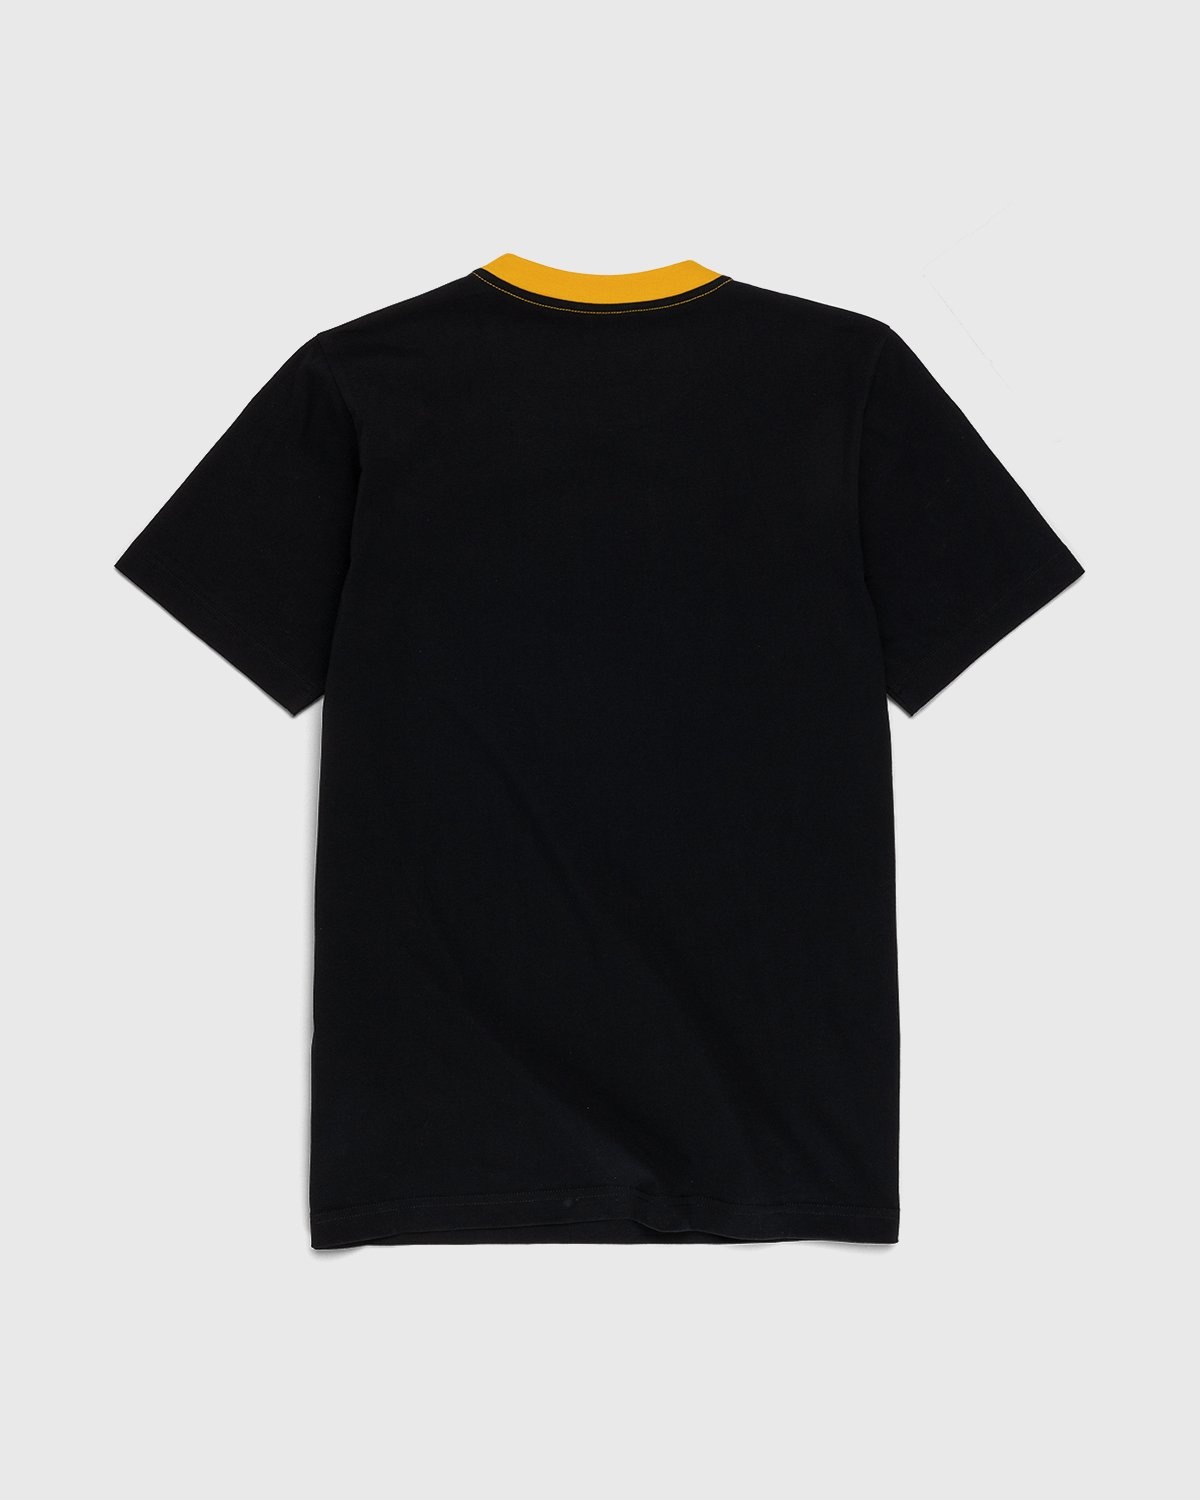 Marni – Stripe Logo Bio Jersey T-Shirt Black/Gold - Tops - Yellow - Image 2